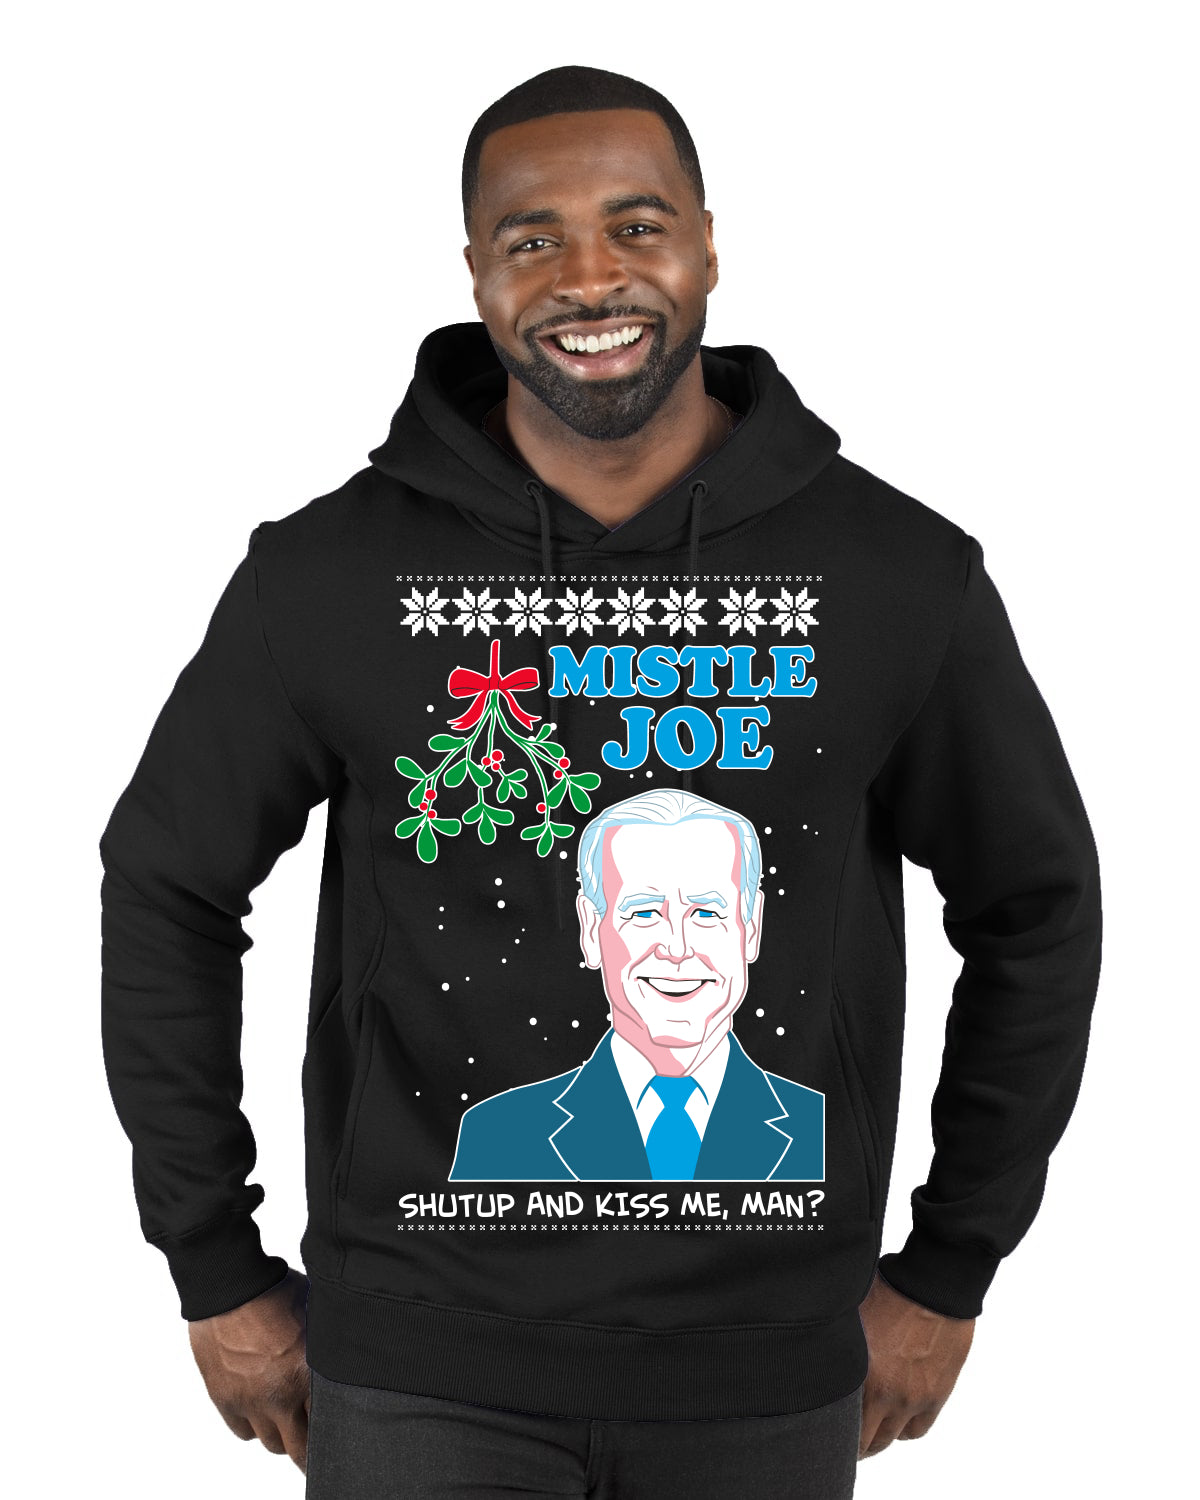 Mistle Joe Shut Up And Kiss Me Man Biden Ugly Christmas Sweater Premium Graphic Hoodie Sweatshirt